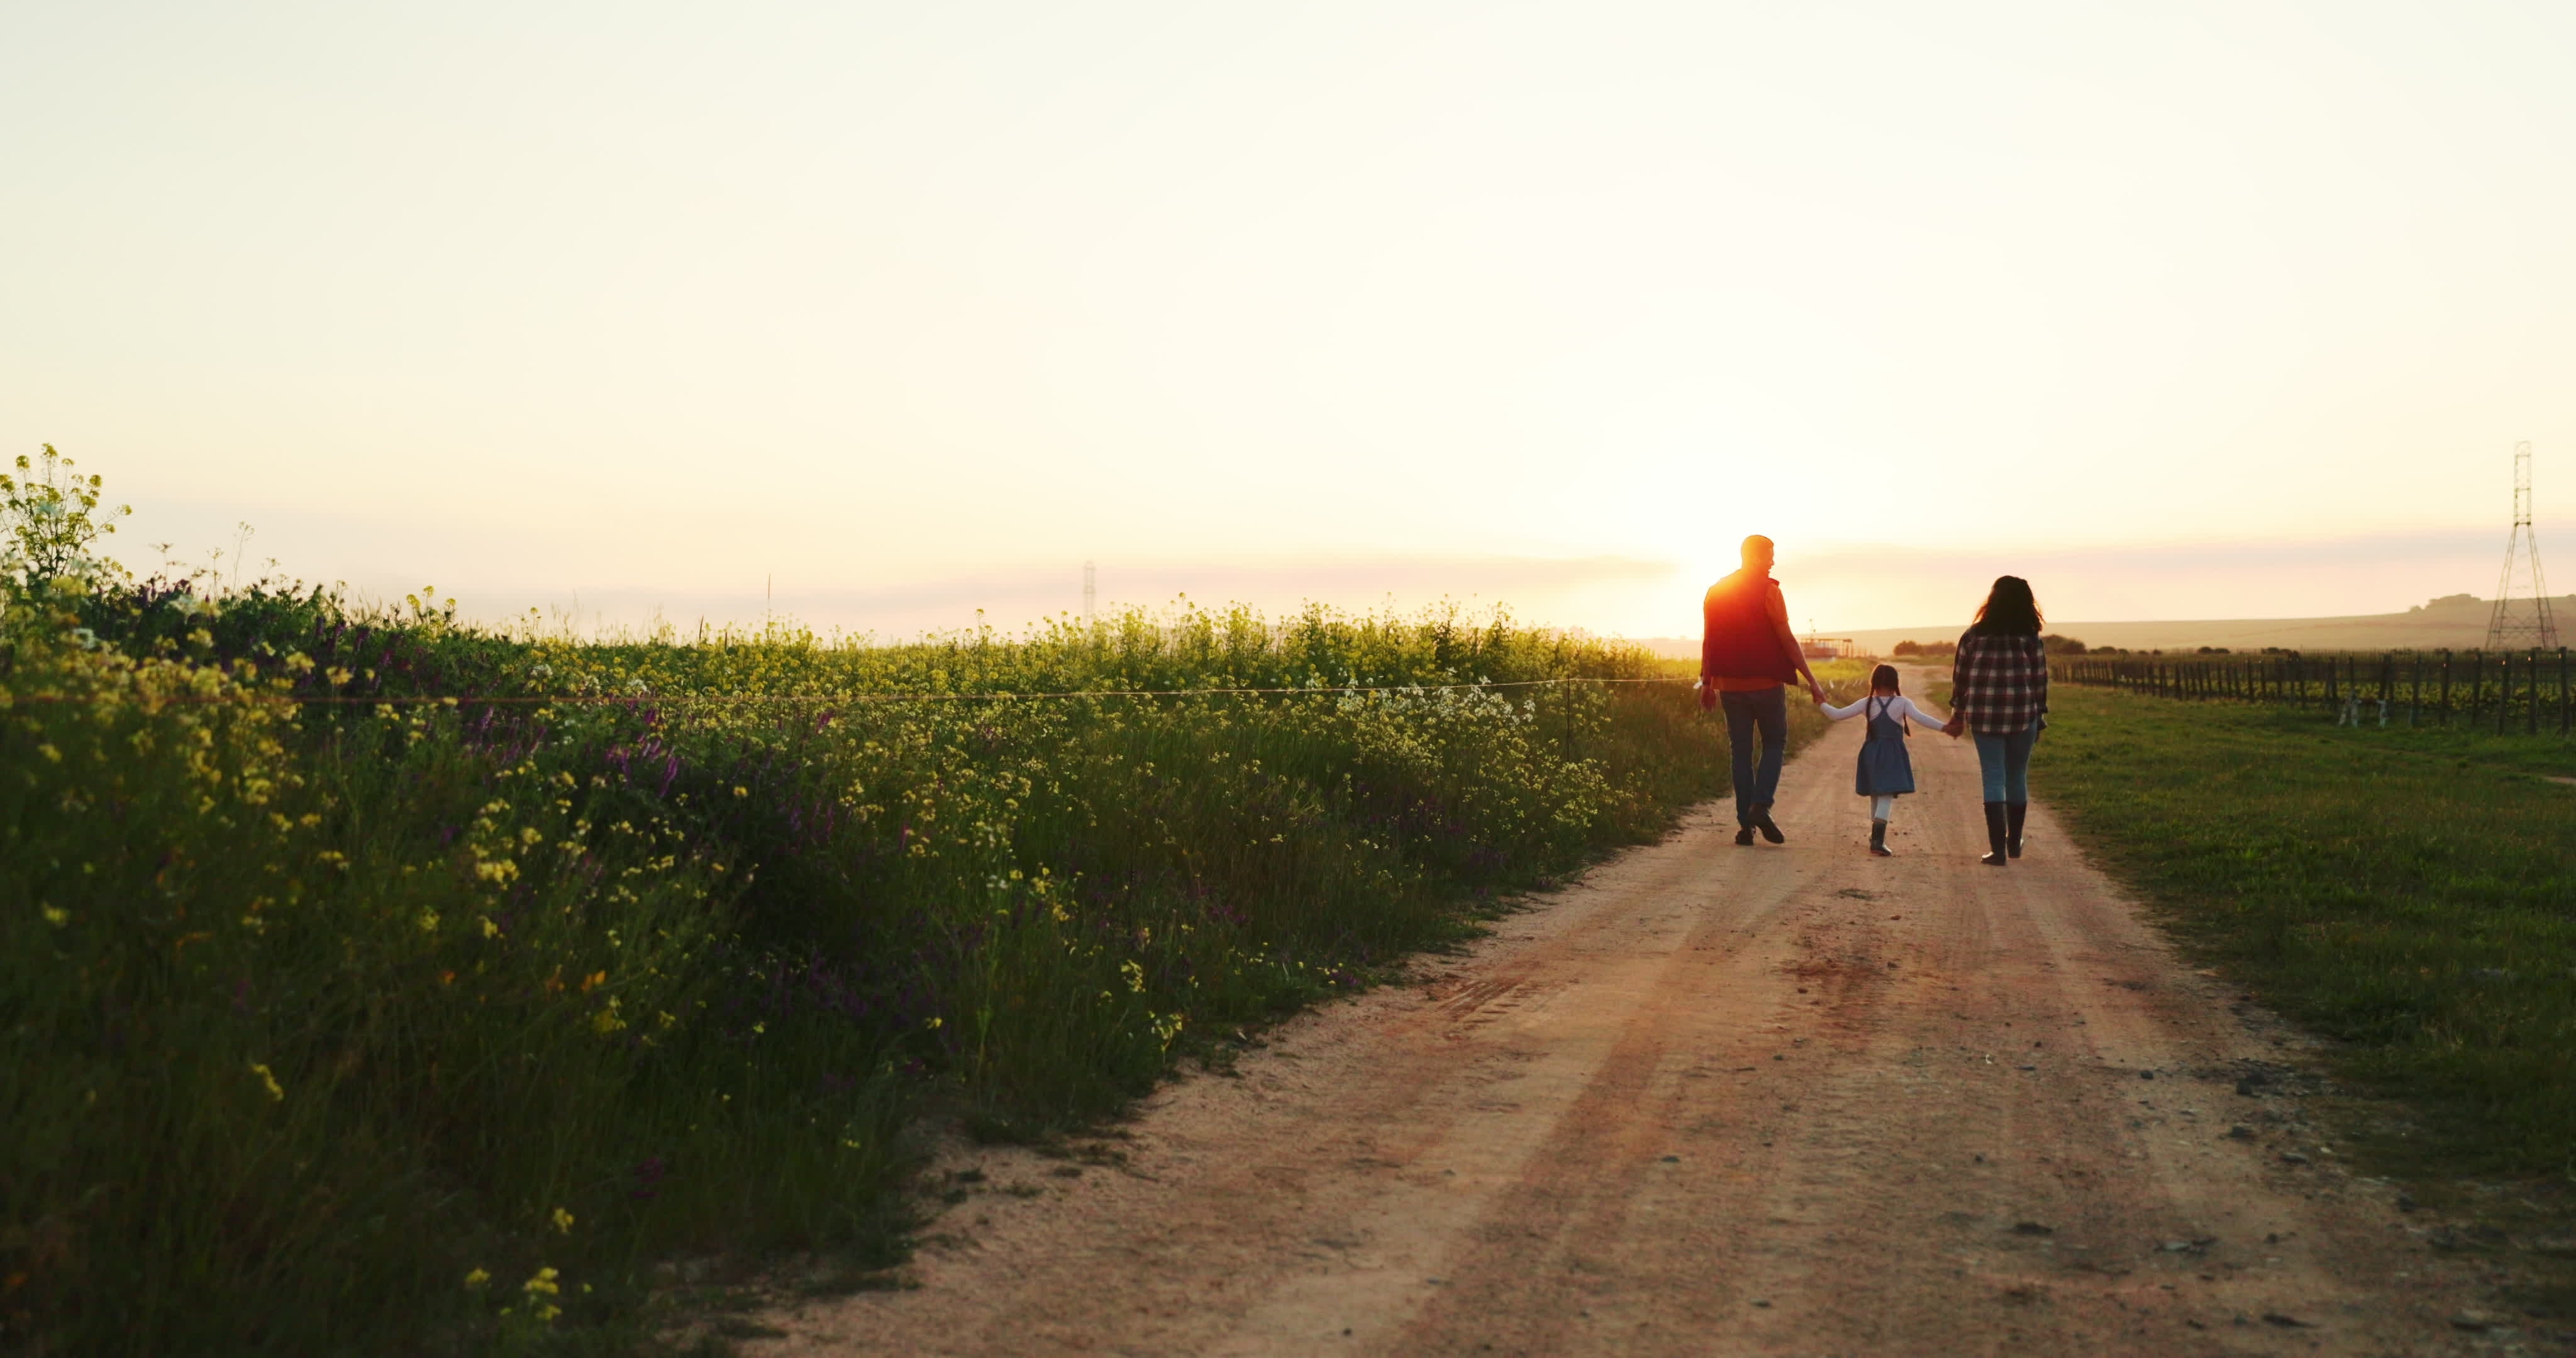 A family of three enjoying a walk on their farm | Source: Shutterstock